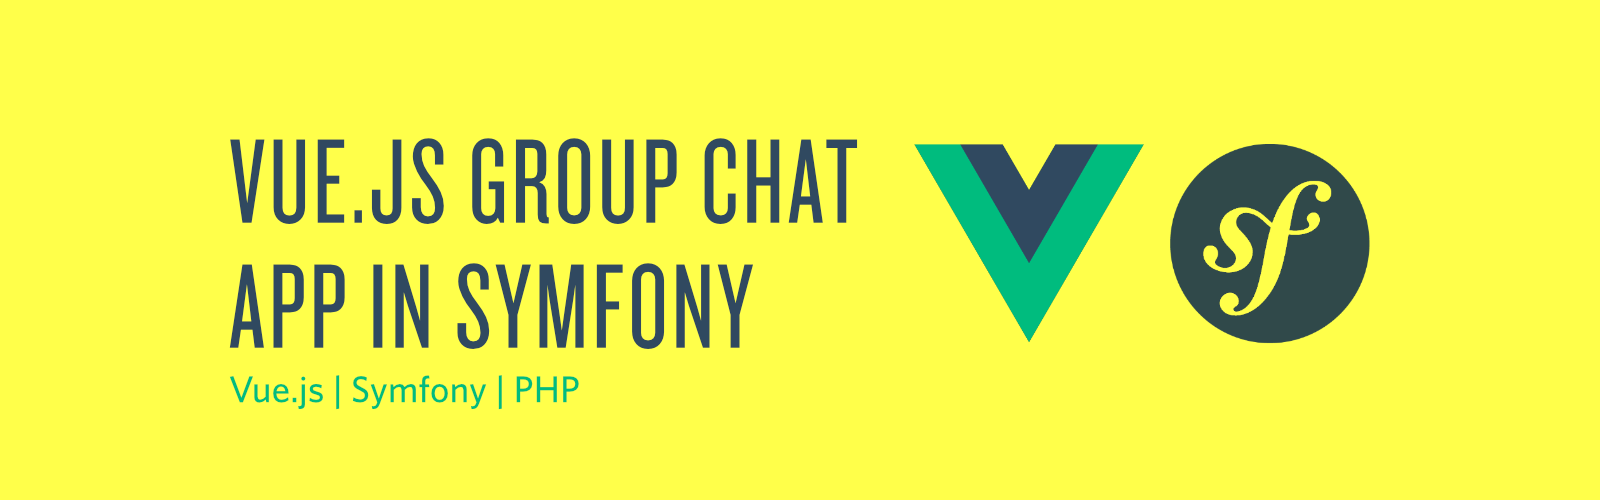 vue-js-group-chat-app-symfony.png